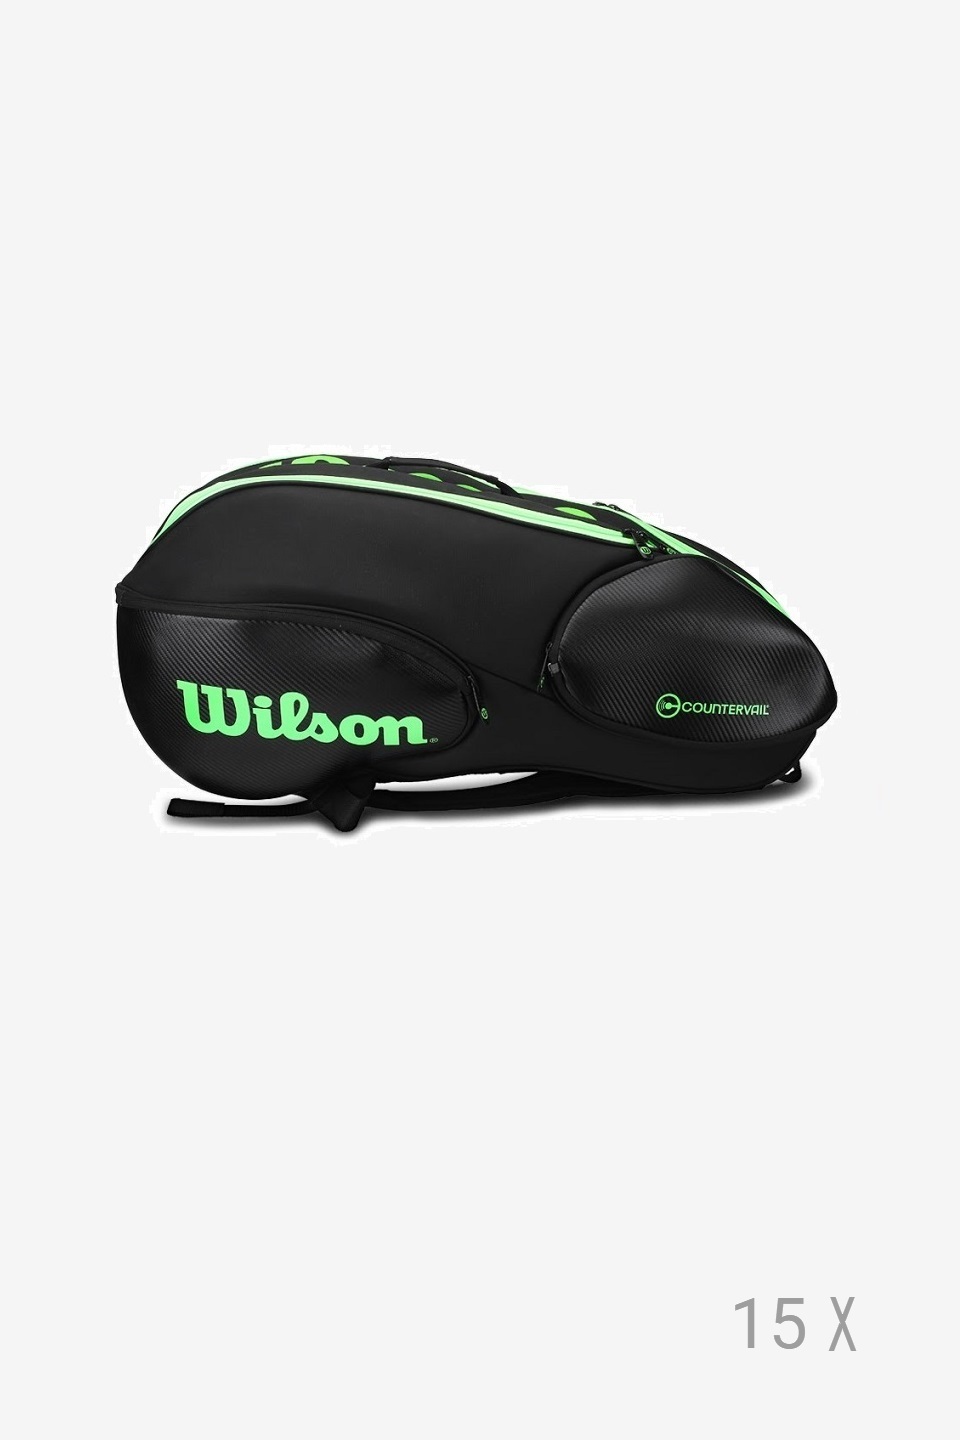 WİLSON - Wilson Blade 15-Pack Tenis Çantası